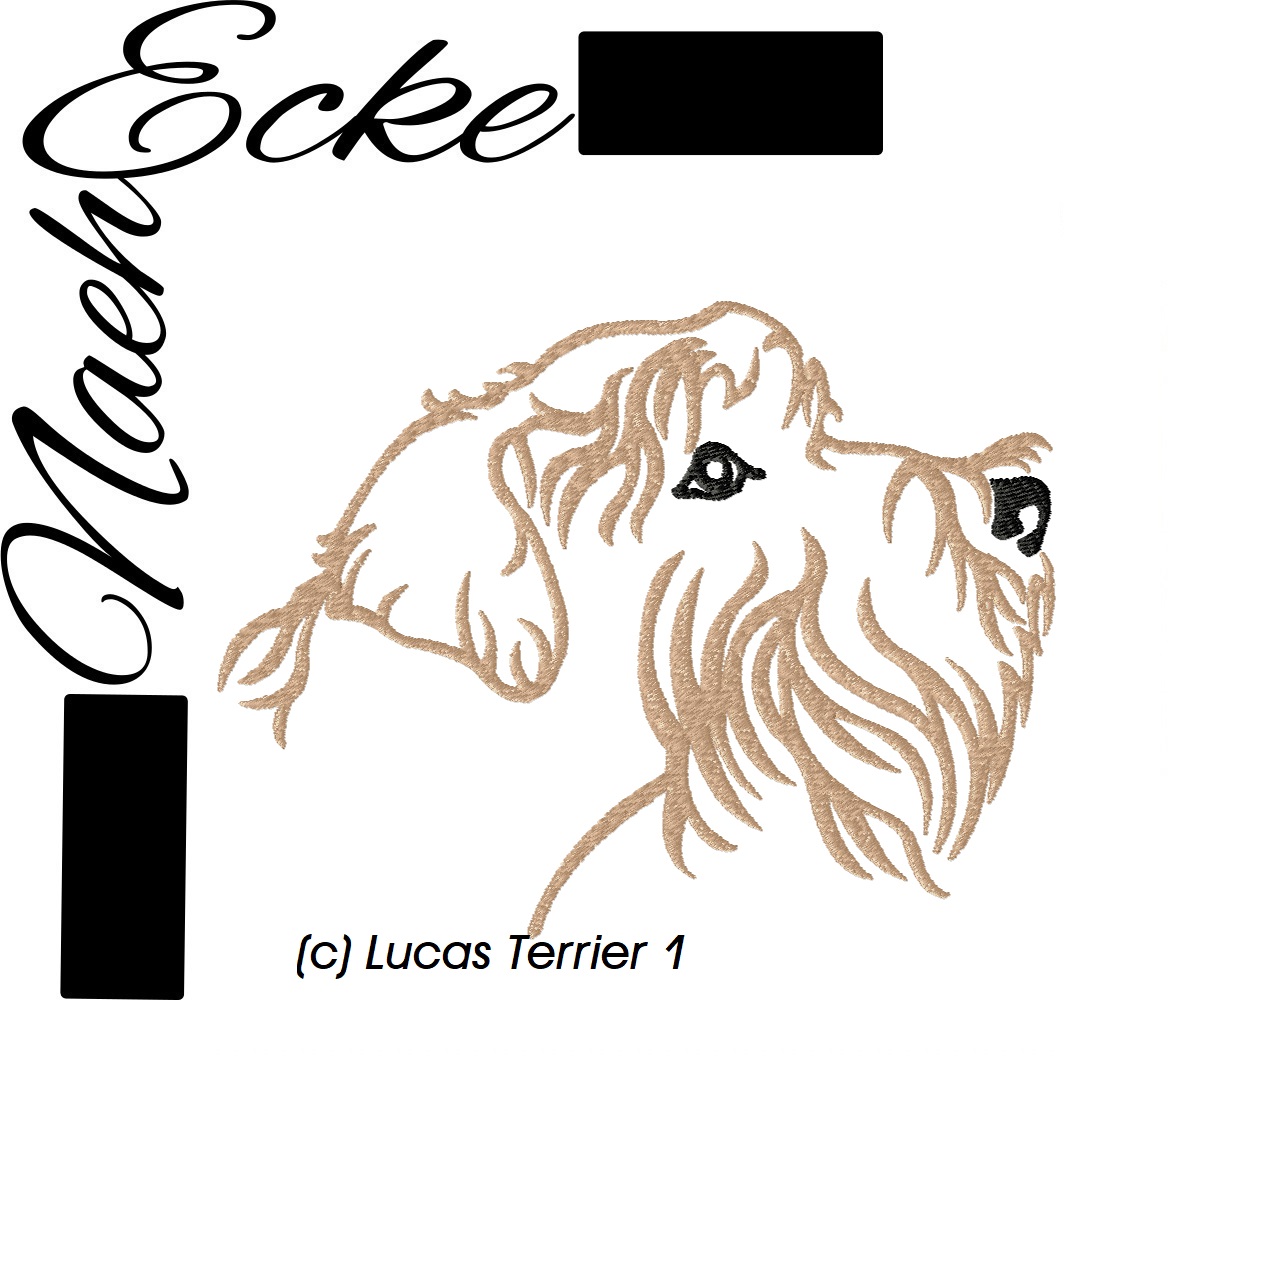 Lucas Terrier